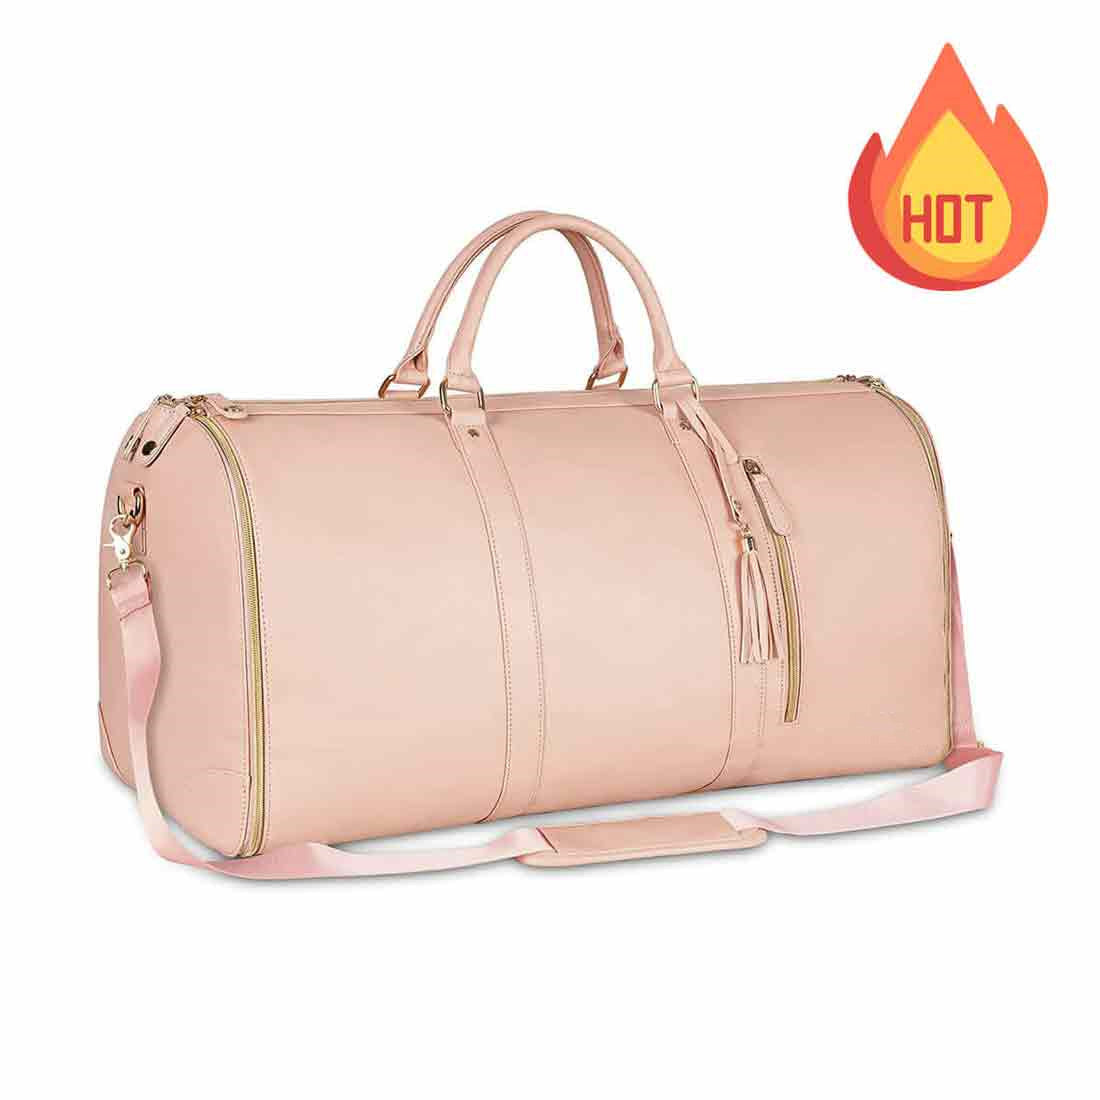 Matein Pink Duffle bag for women